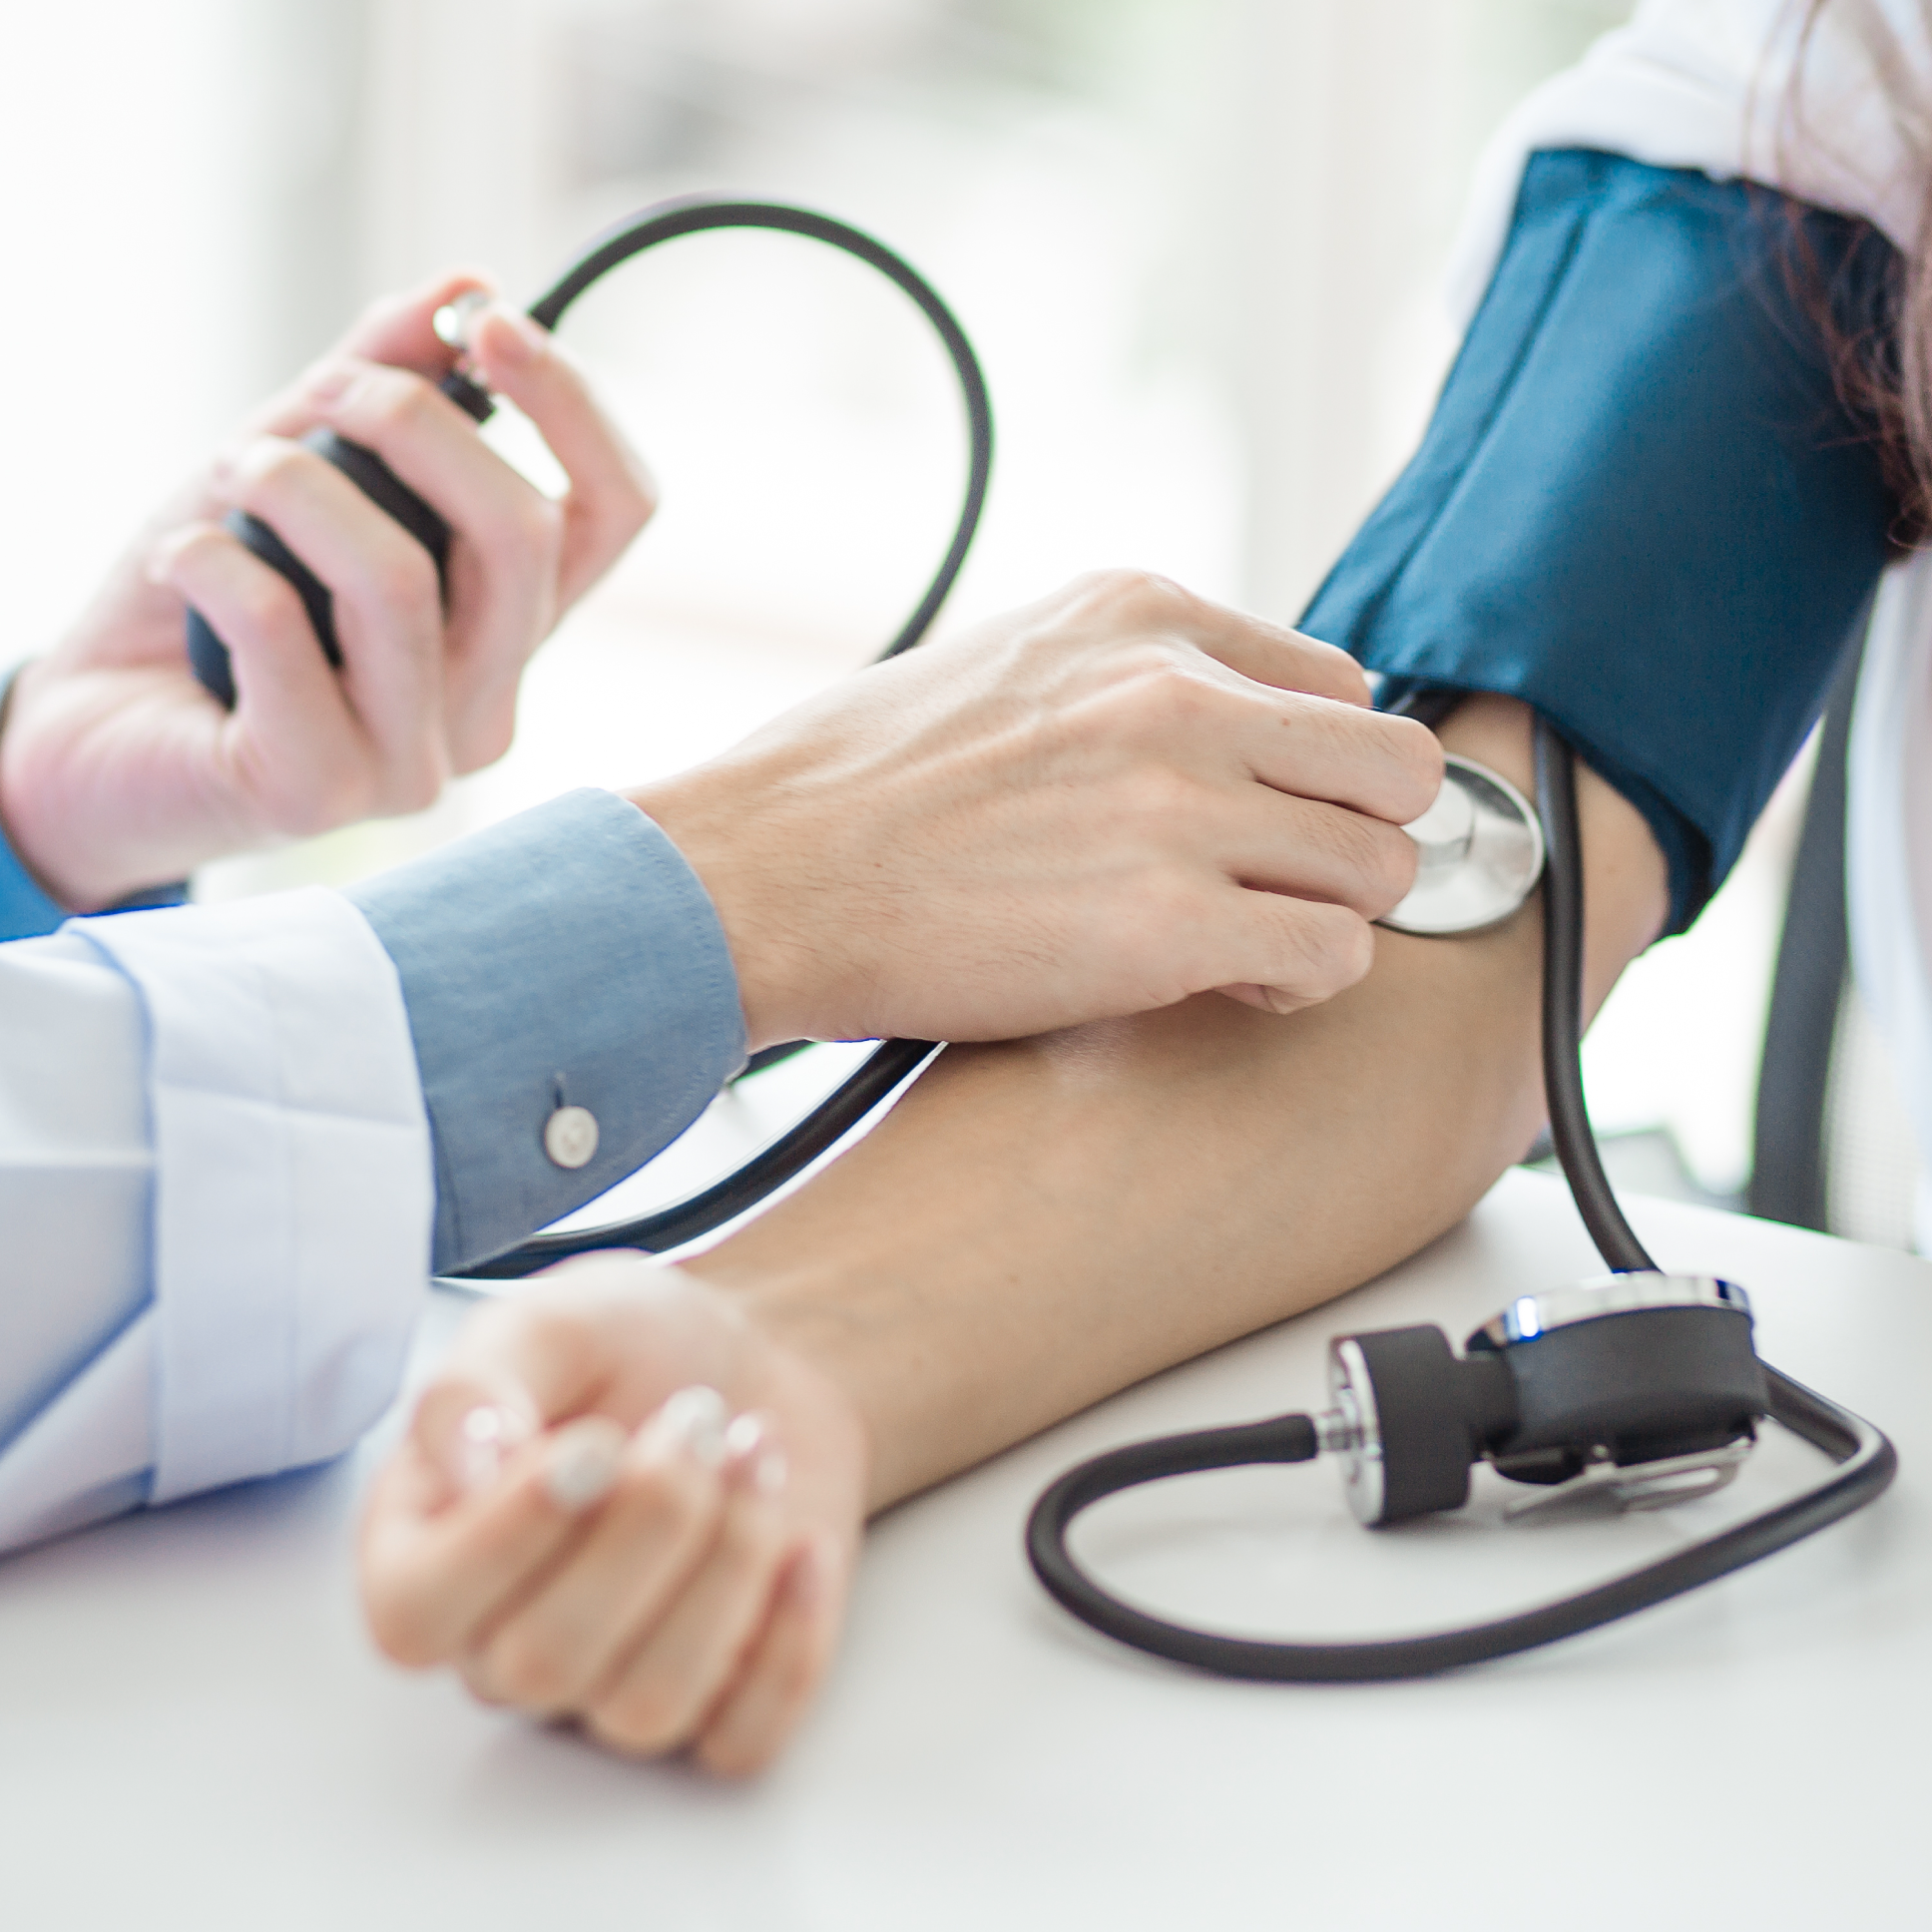 LIVE WEBINAR: Measuring blood pressure: Clinic, home and ambulatory measures